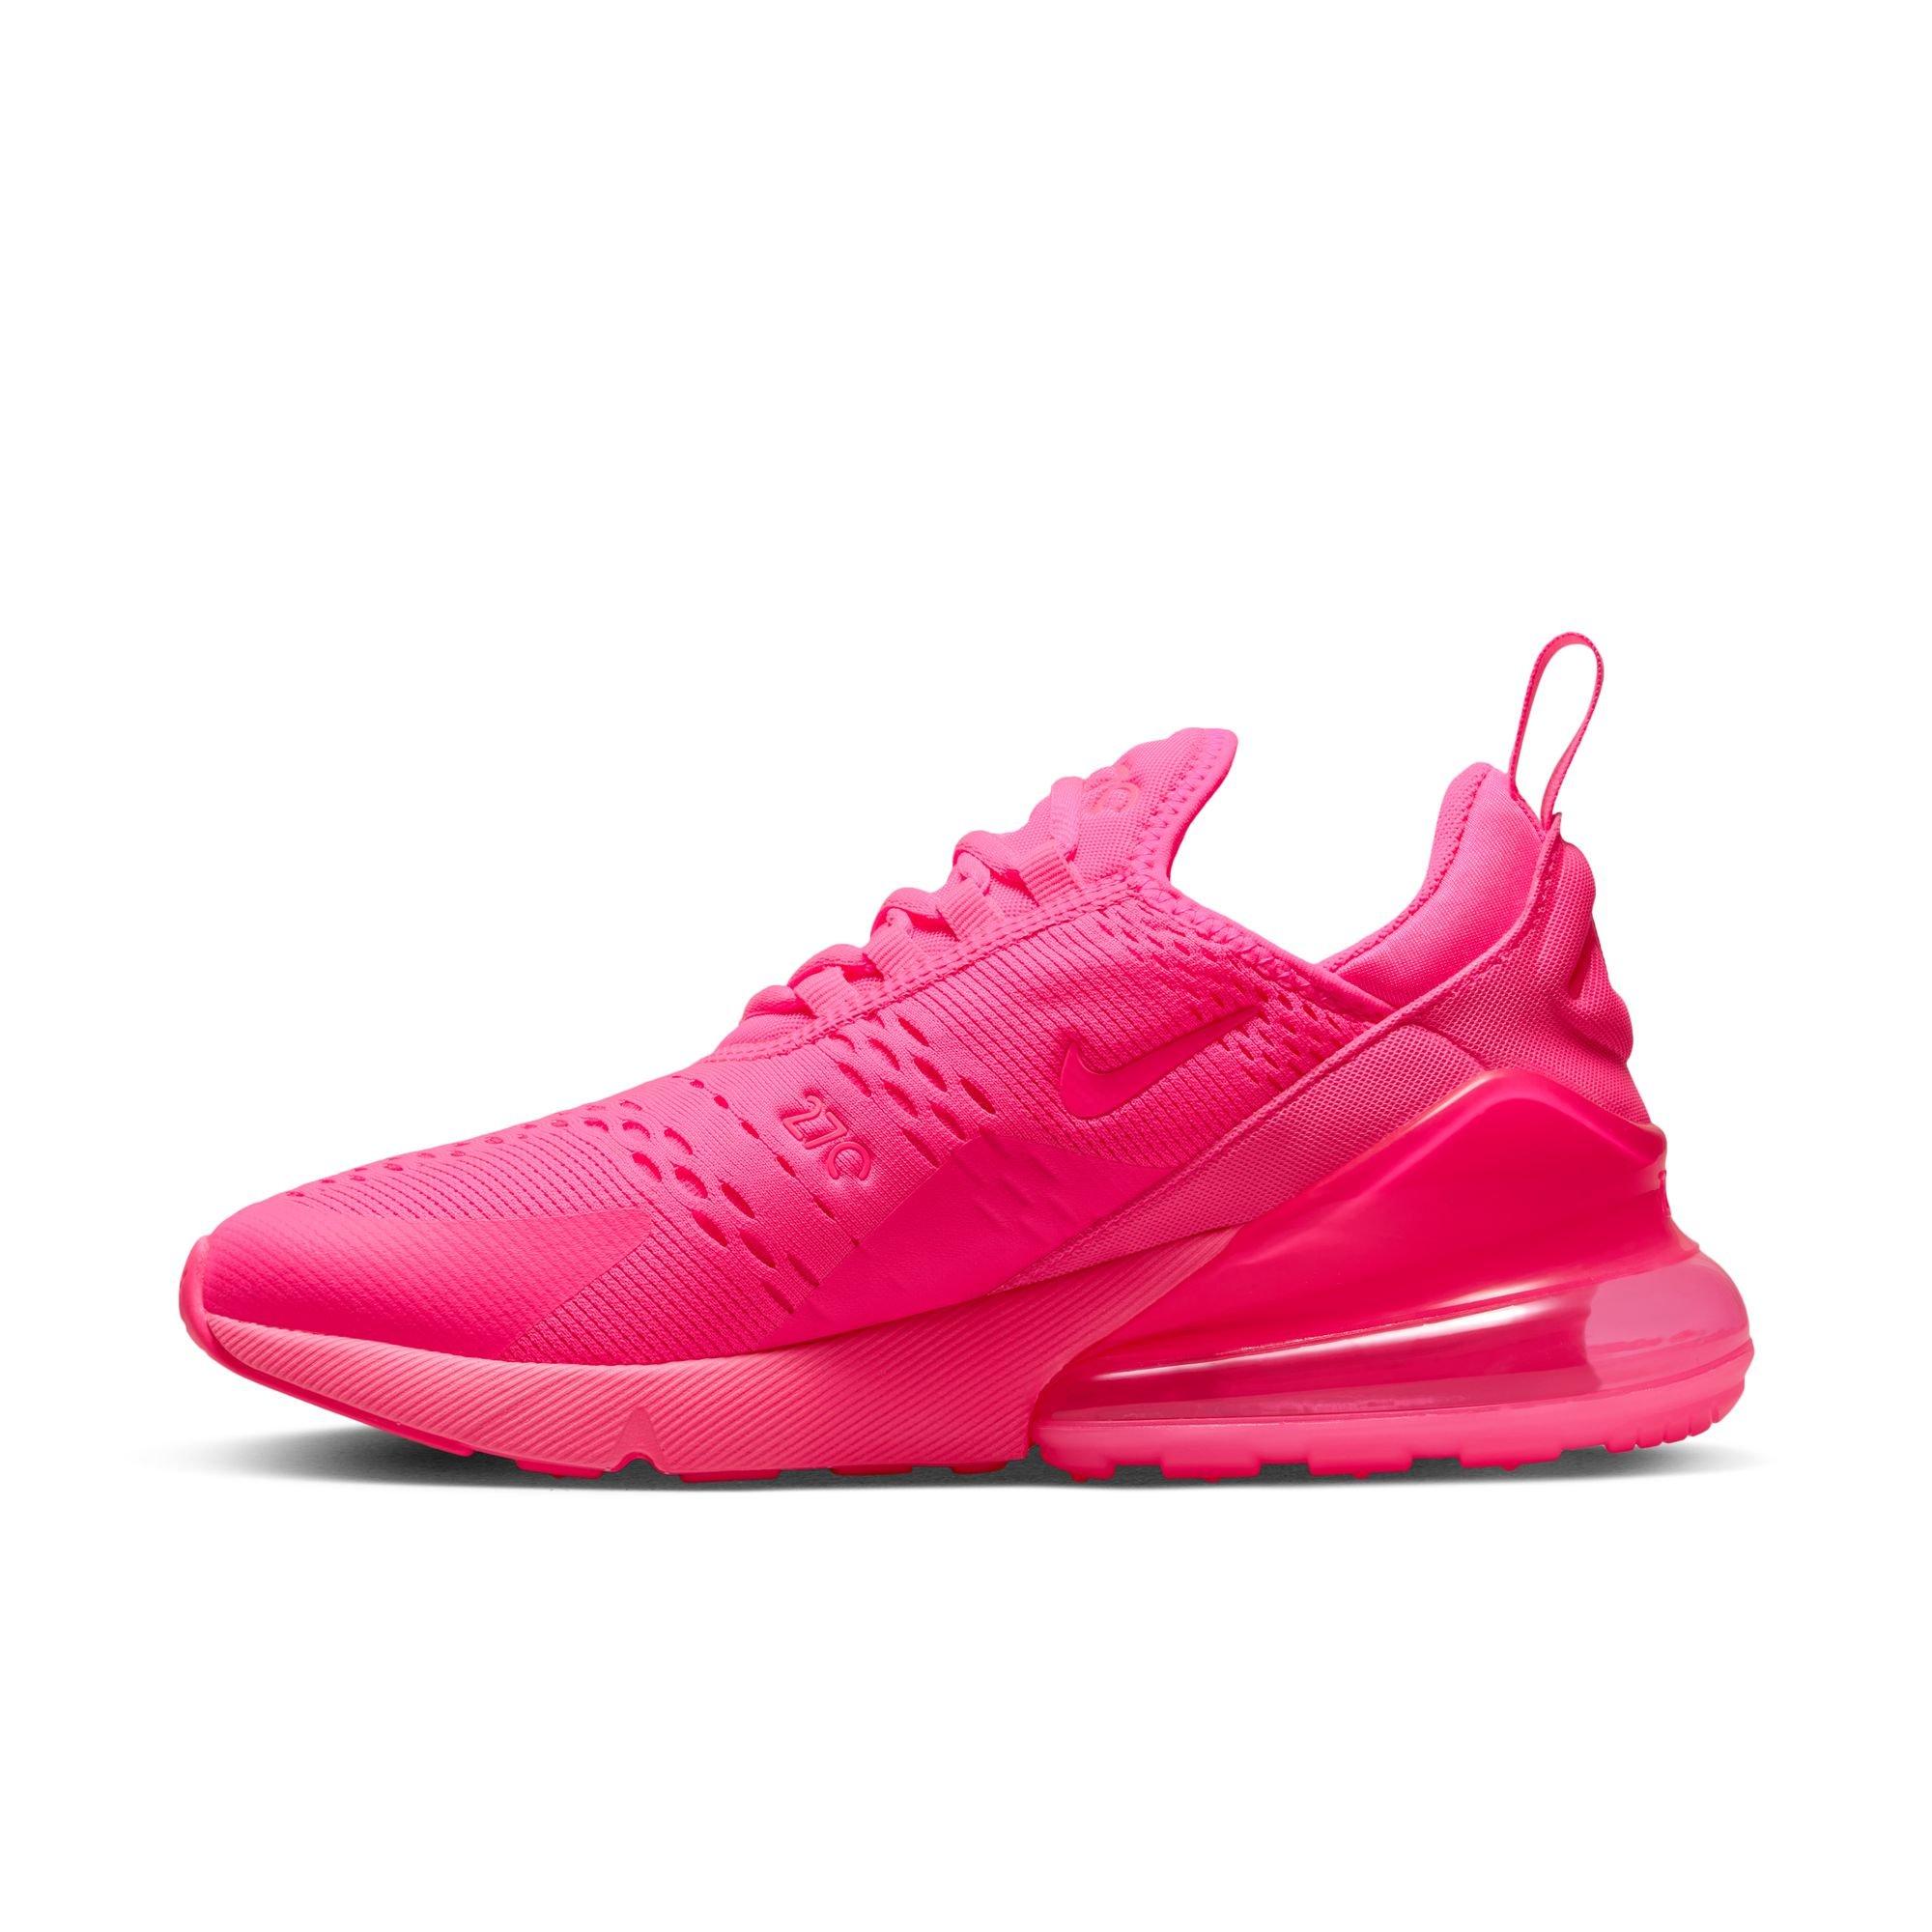 Nike Air Max 270 White/Pink/Orange Women's Shoe - Hibbett